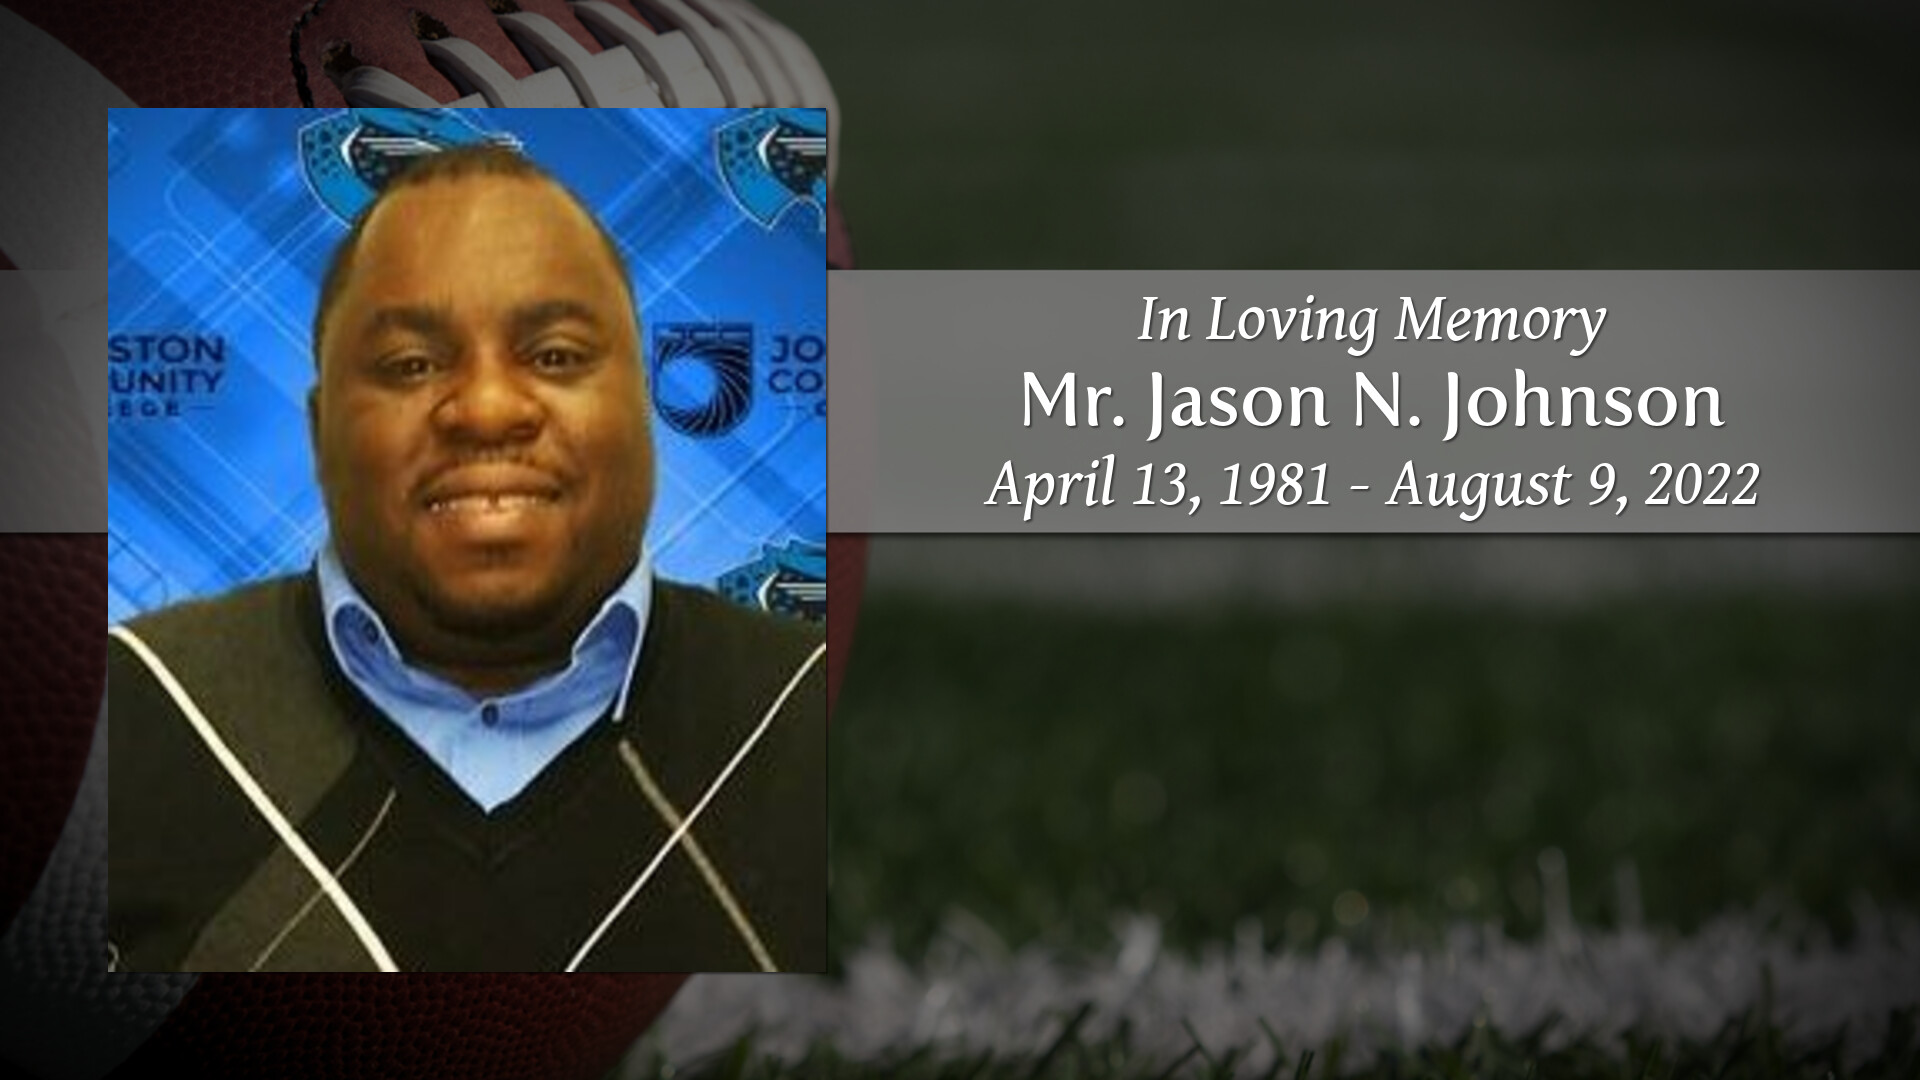 Mr. Jason N. Johnson Tribute Video